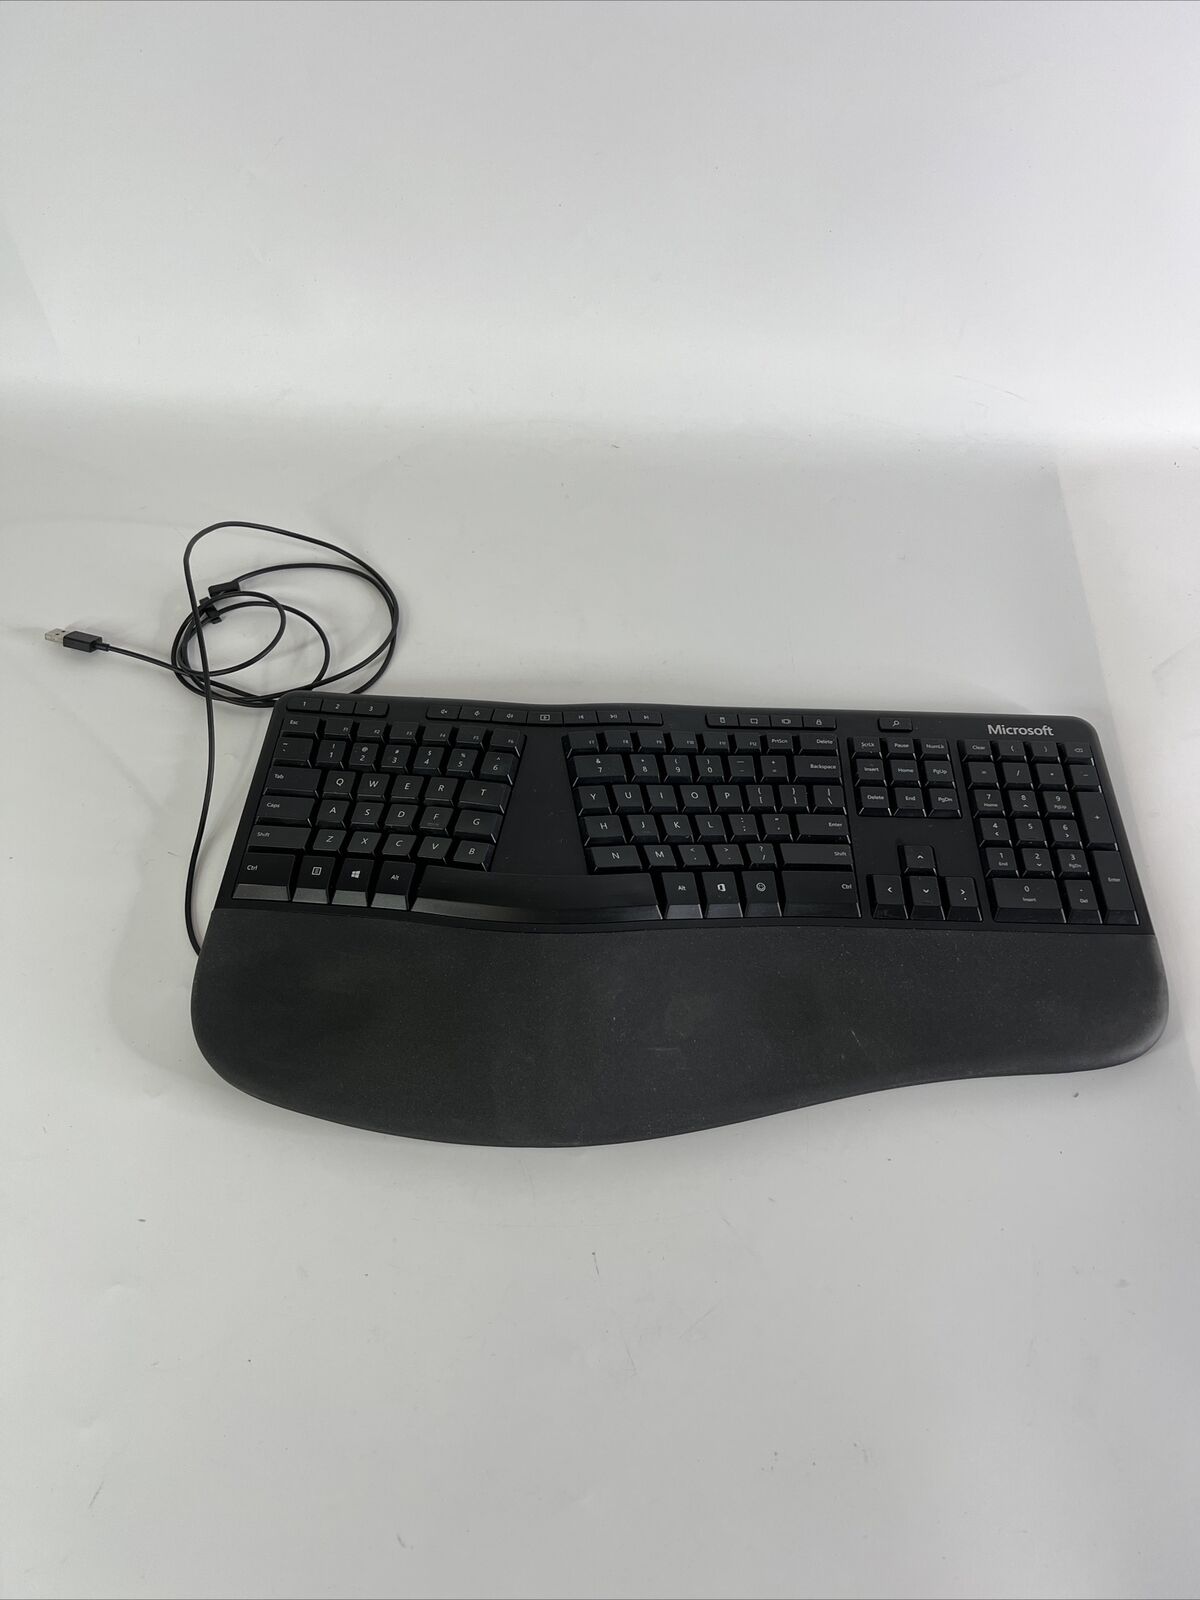 Microsoft LXM-00001 Model 1878 Wired USB 2.0 Ergonomic Keyboard Black Tested